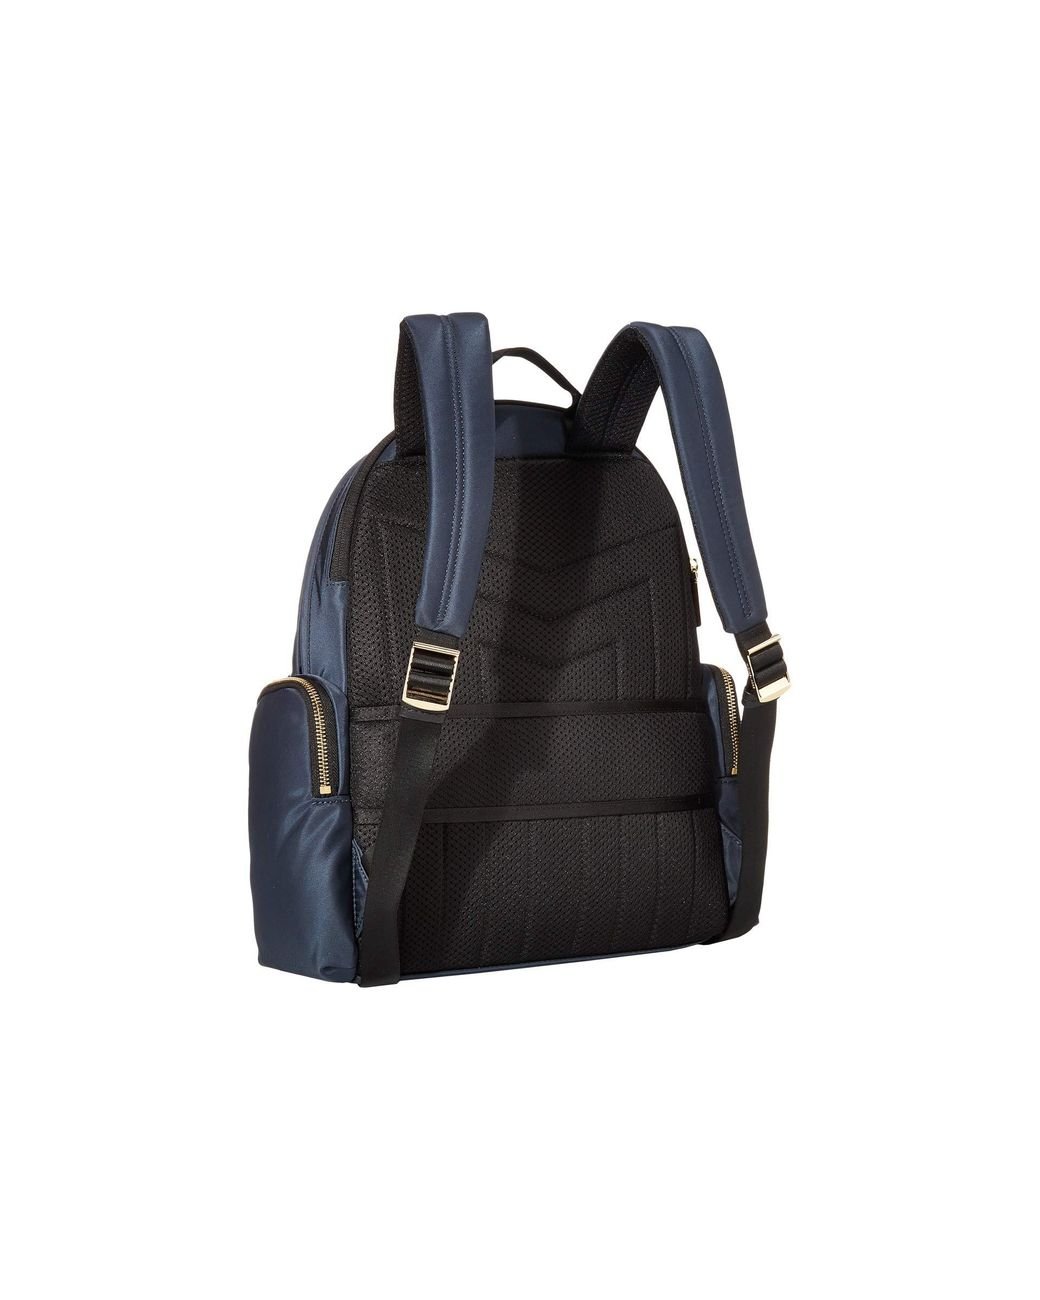 MICHAEL Michael Kors Prescott Large Backpack Black One Size …